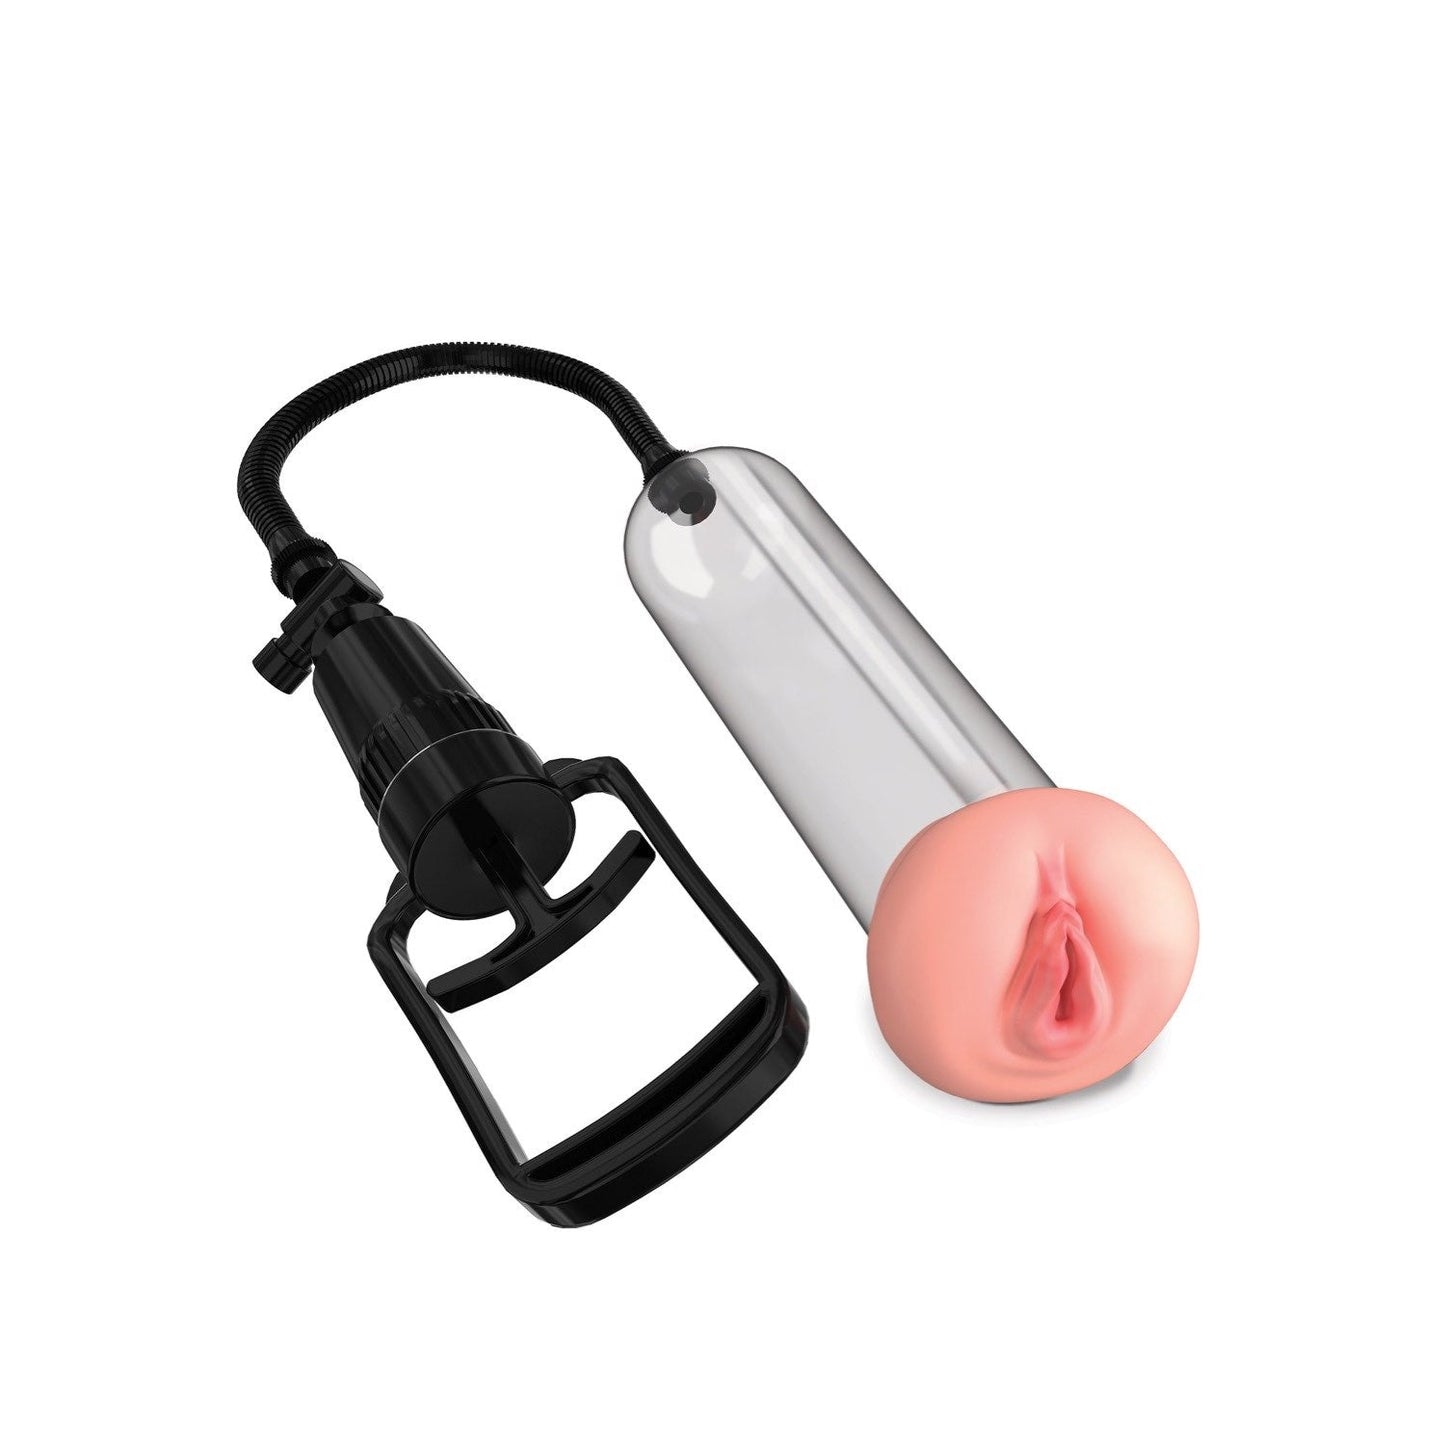 Beginner's Pussy Pump - Penis Pump with Vagina Sleeve